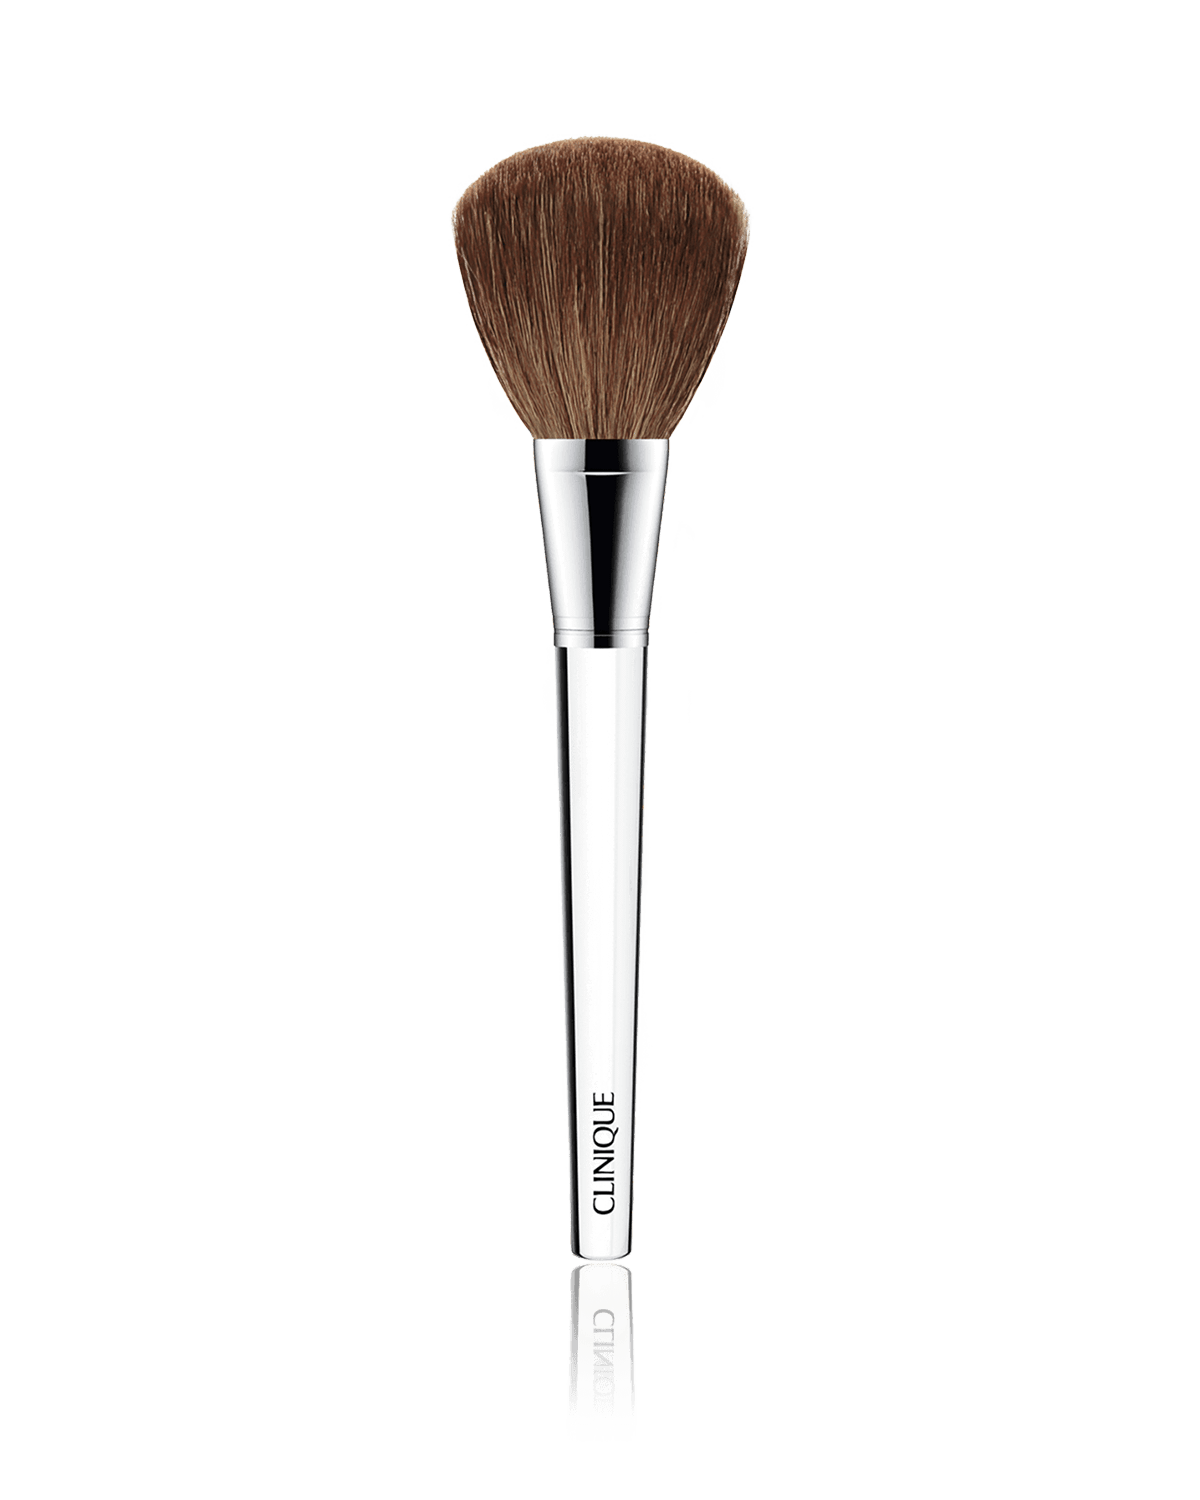 Makeup Brushes | Makeup Clinique Netherlands E-Commerce Site